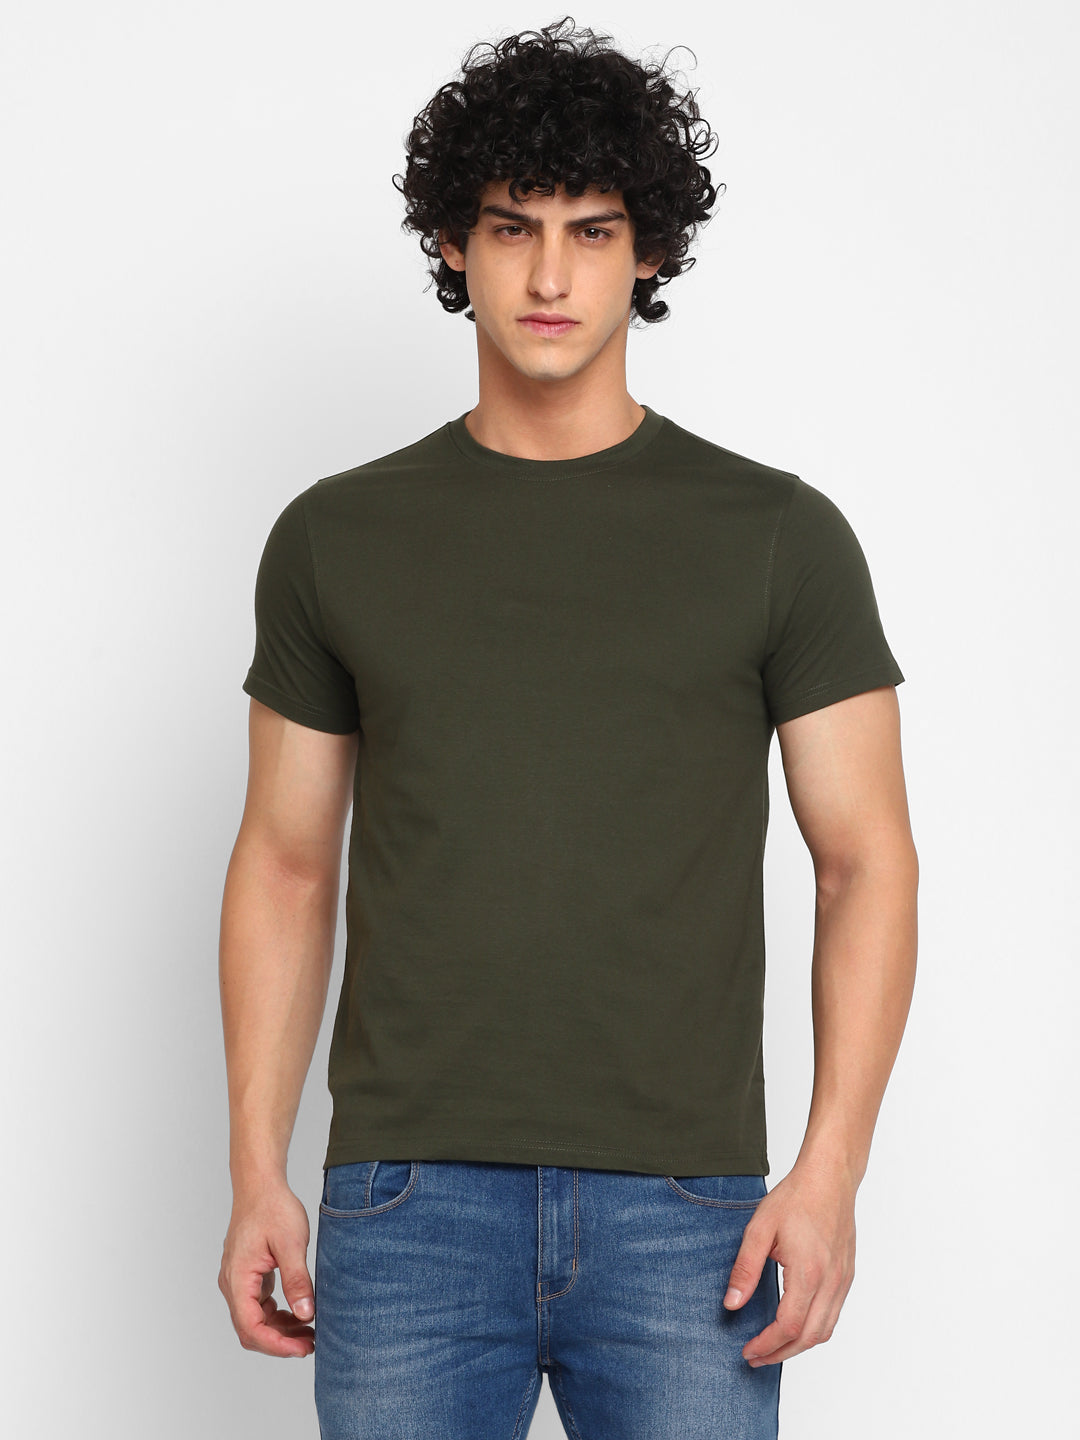 100% Cotton Round Neck T-Shirt for Men Regular Fit - Olive